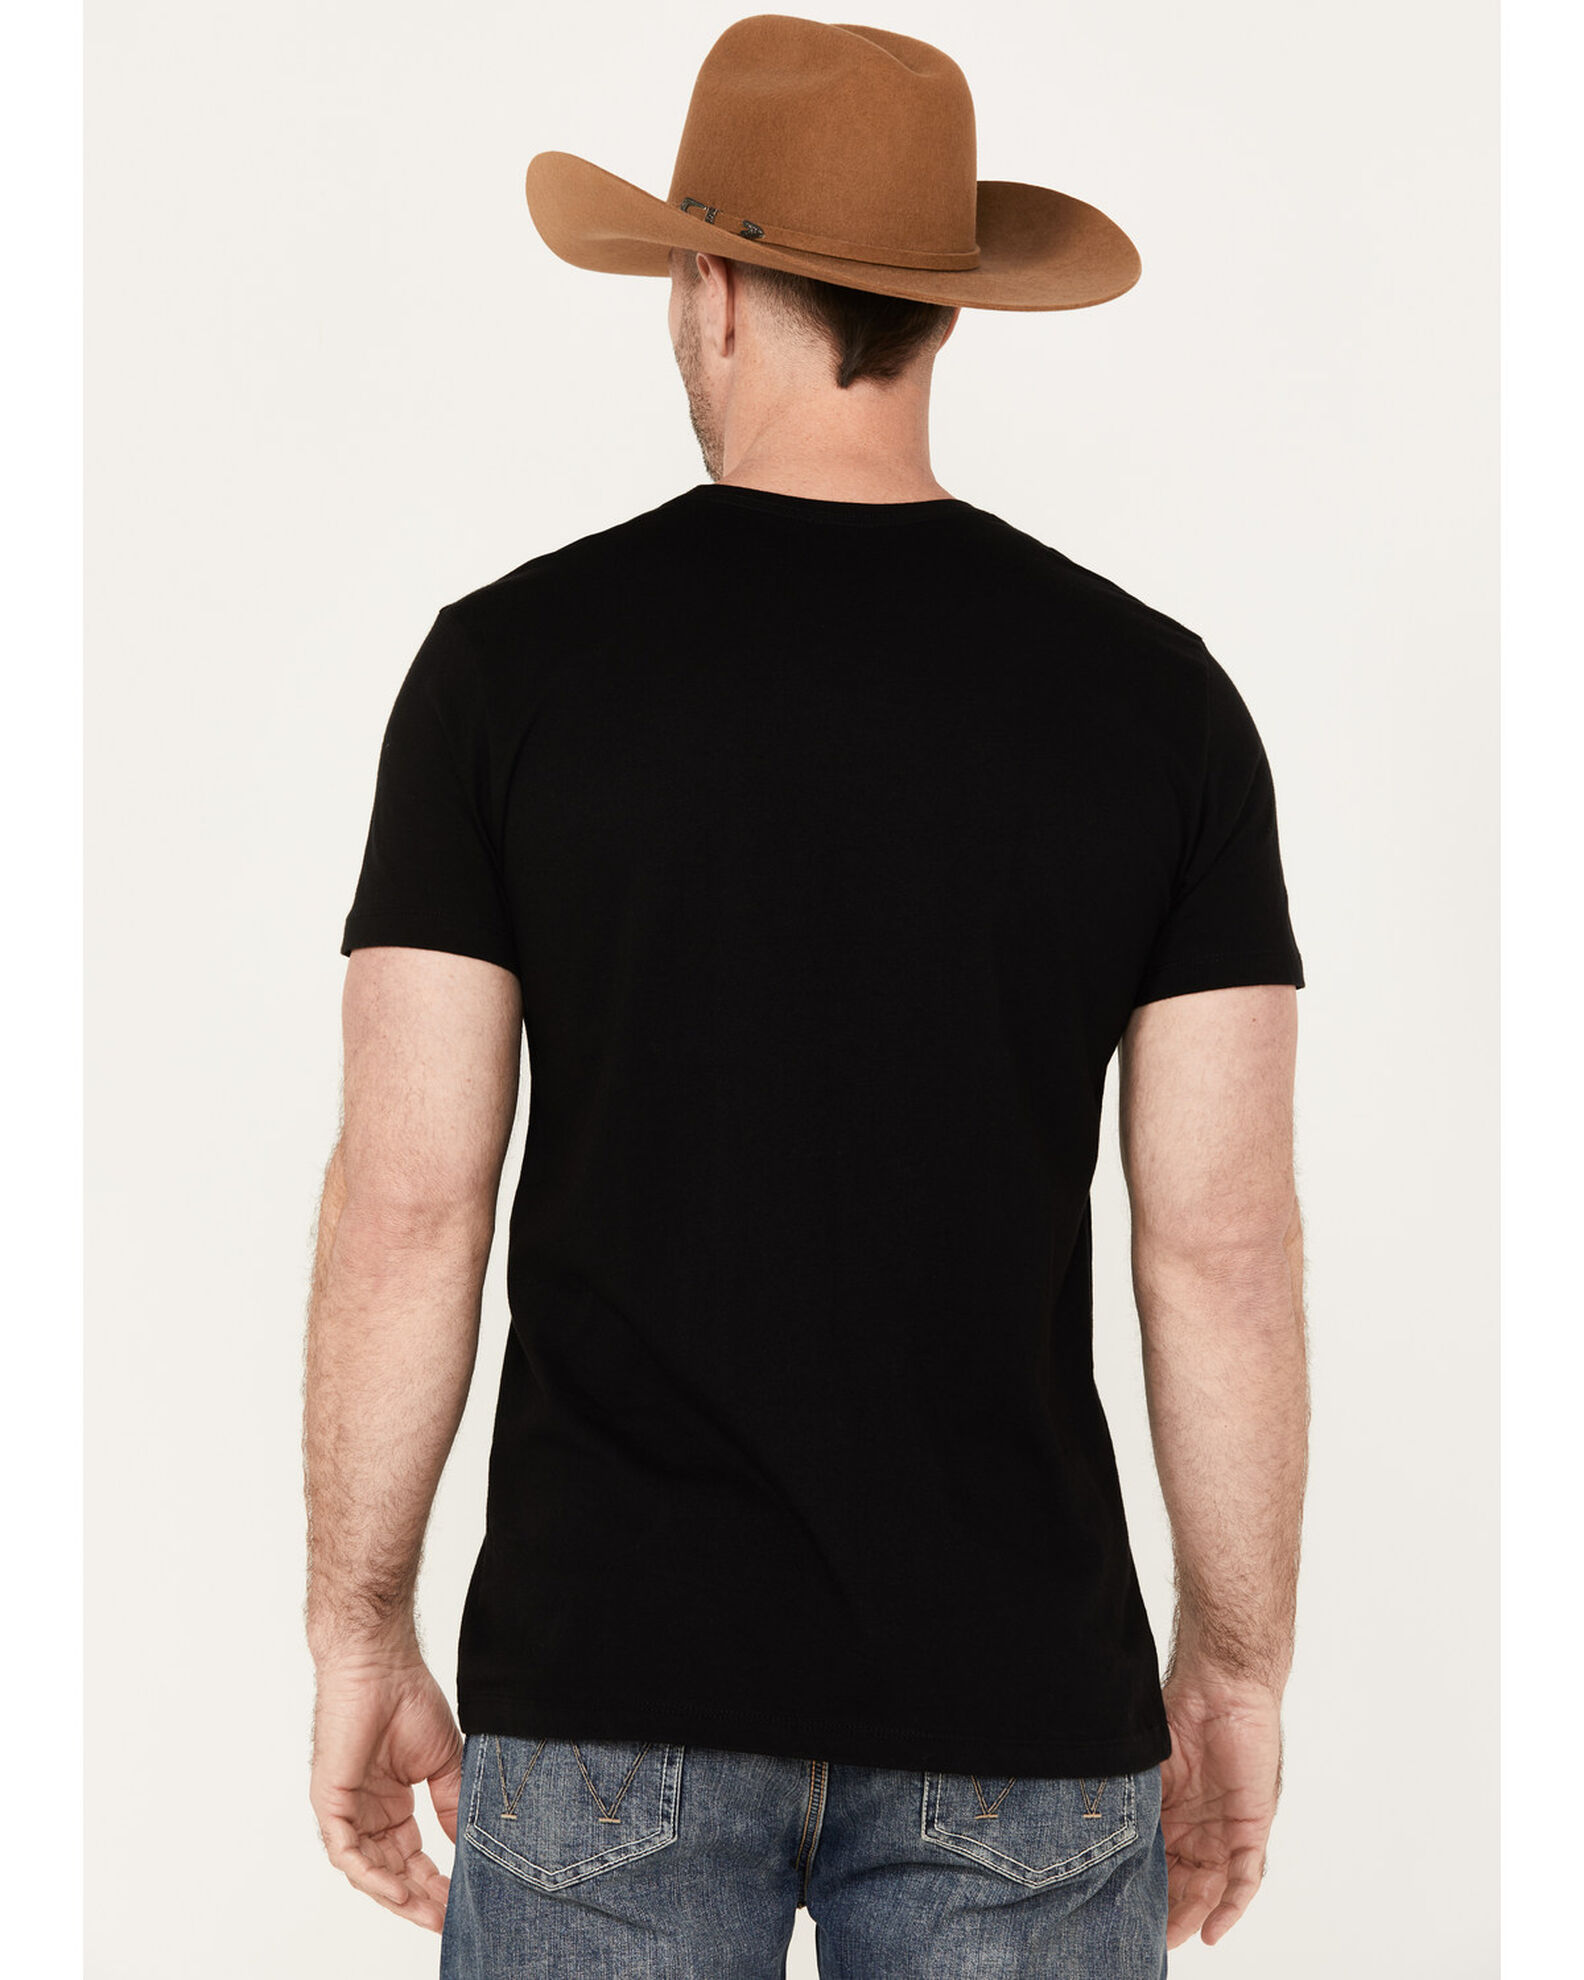 Moonshine Spirit Men's Sombrero Short Sleeve Graphic T-Shirt